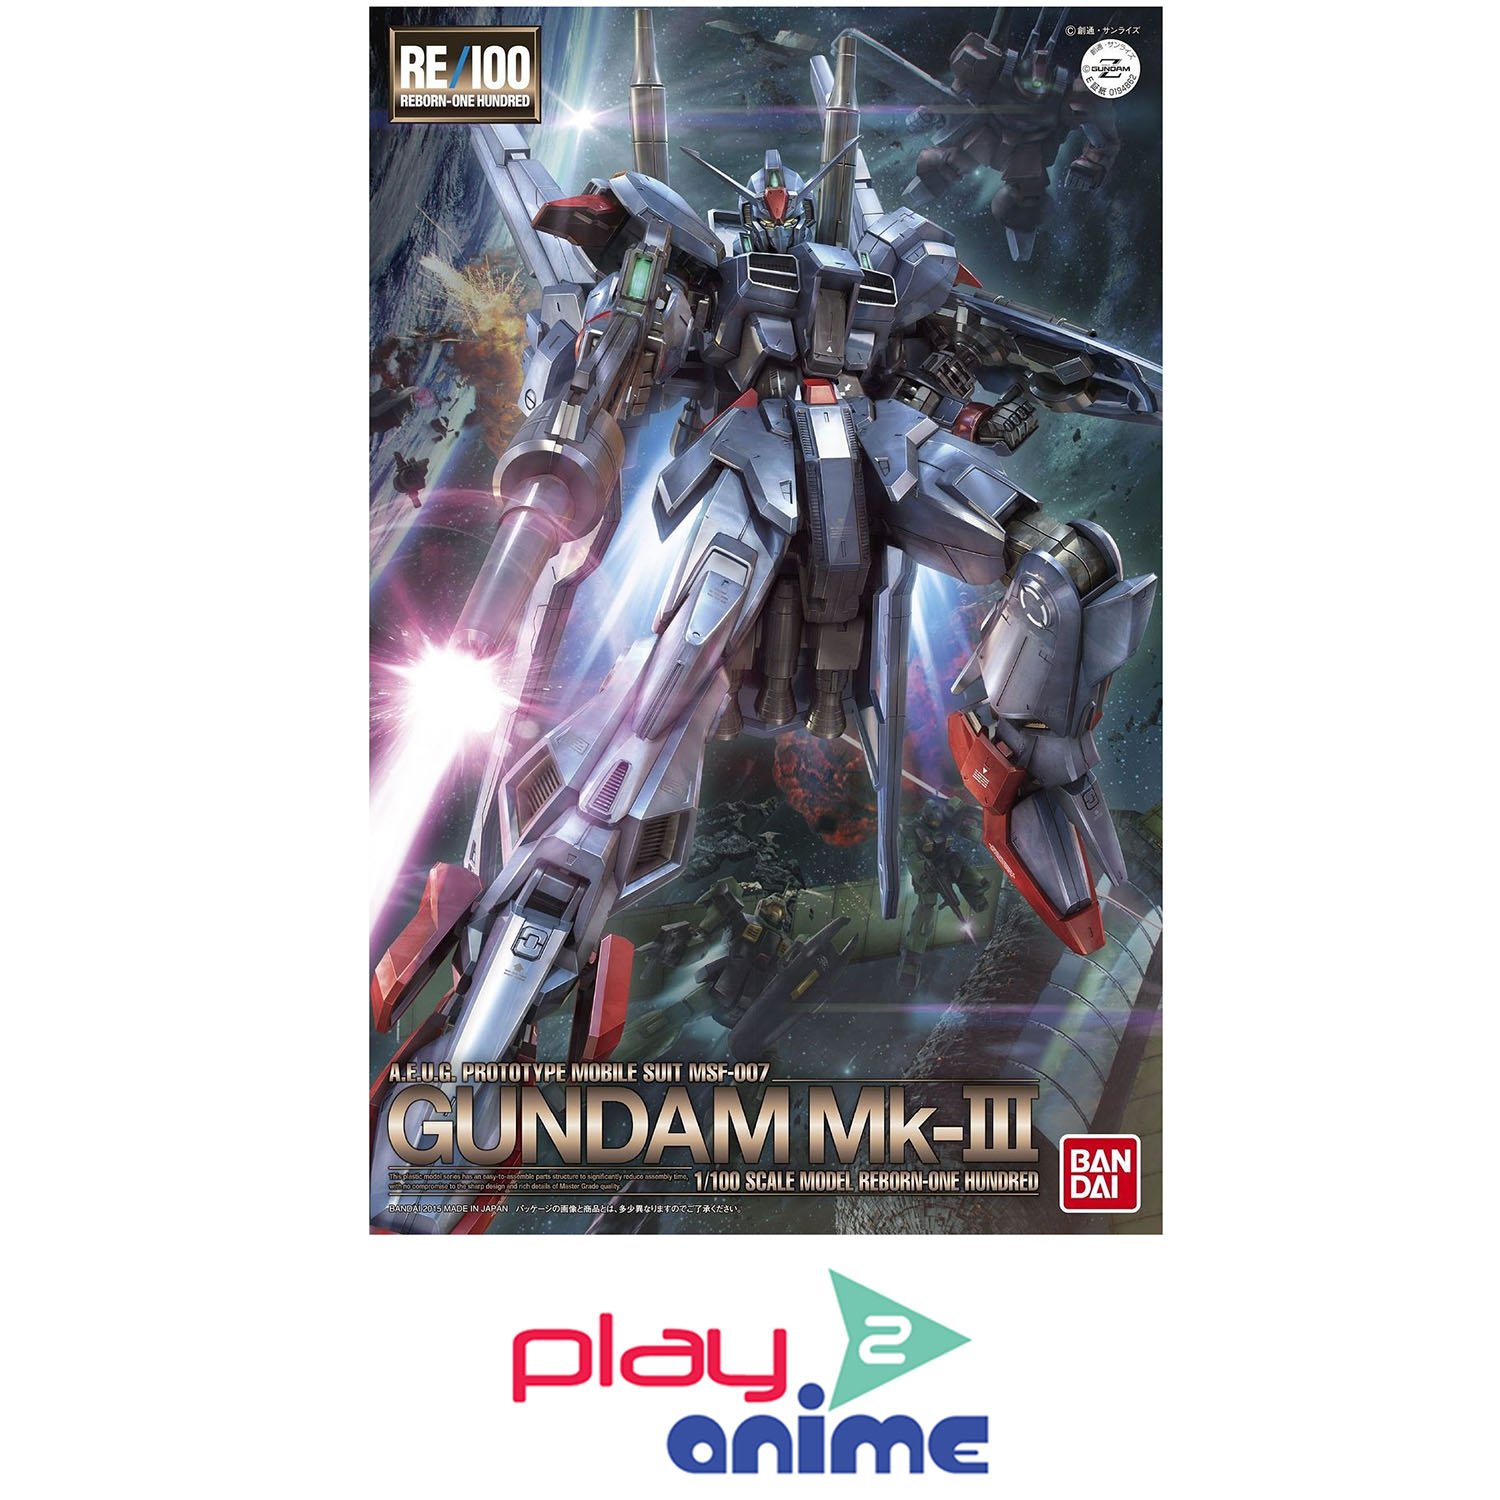 RE/100 Gundam Mk-III